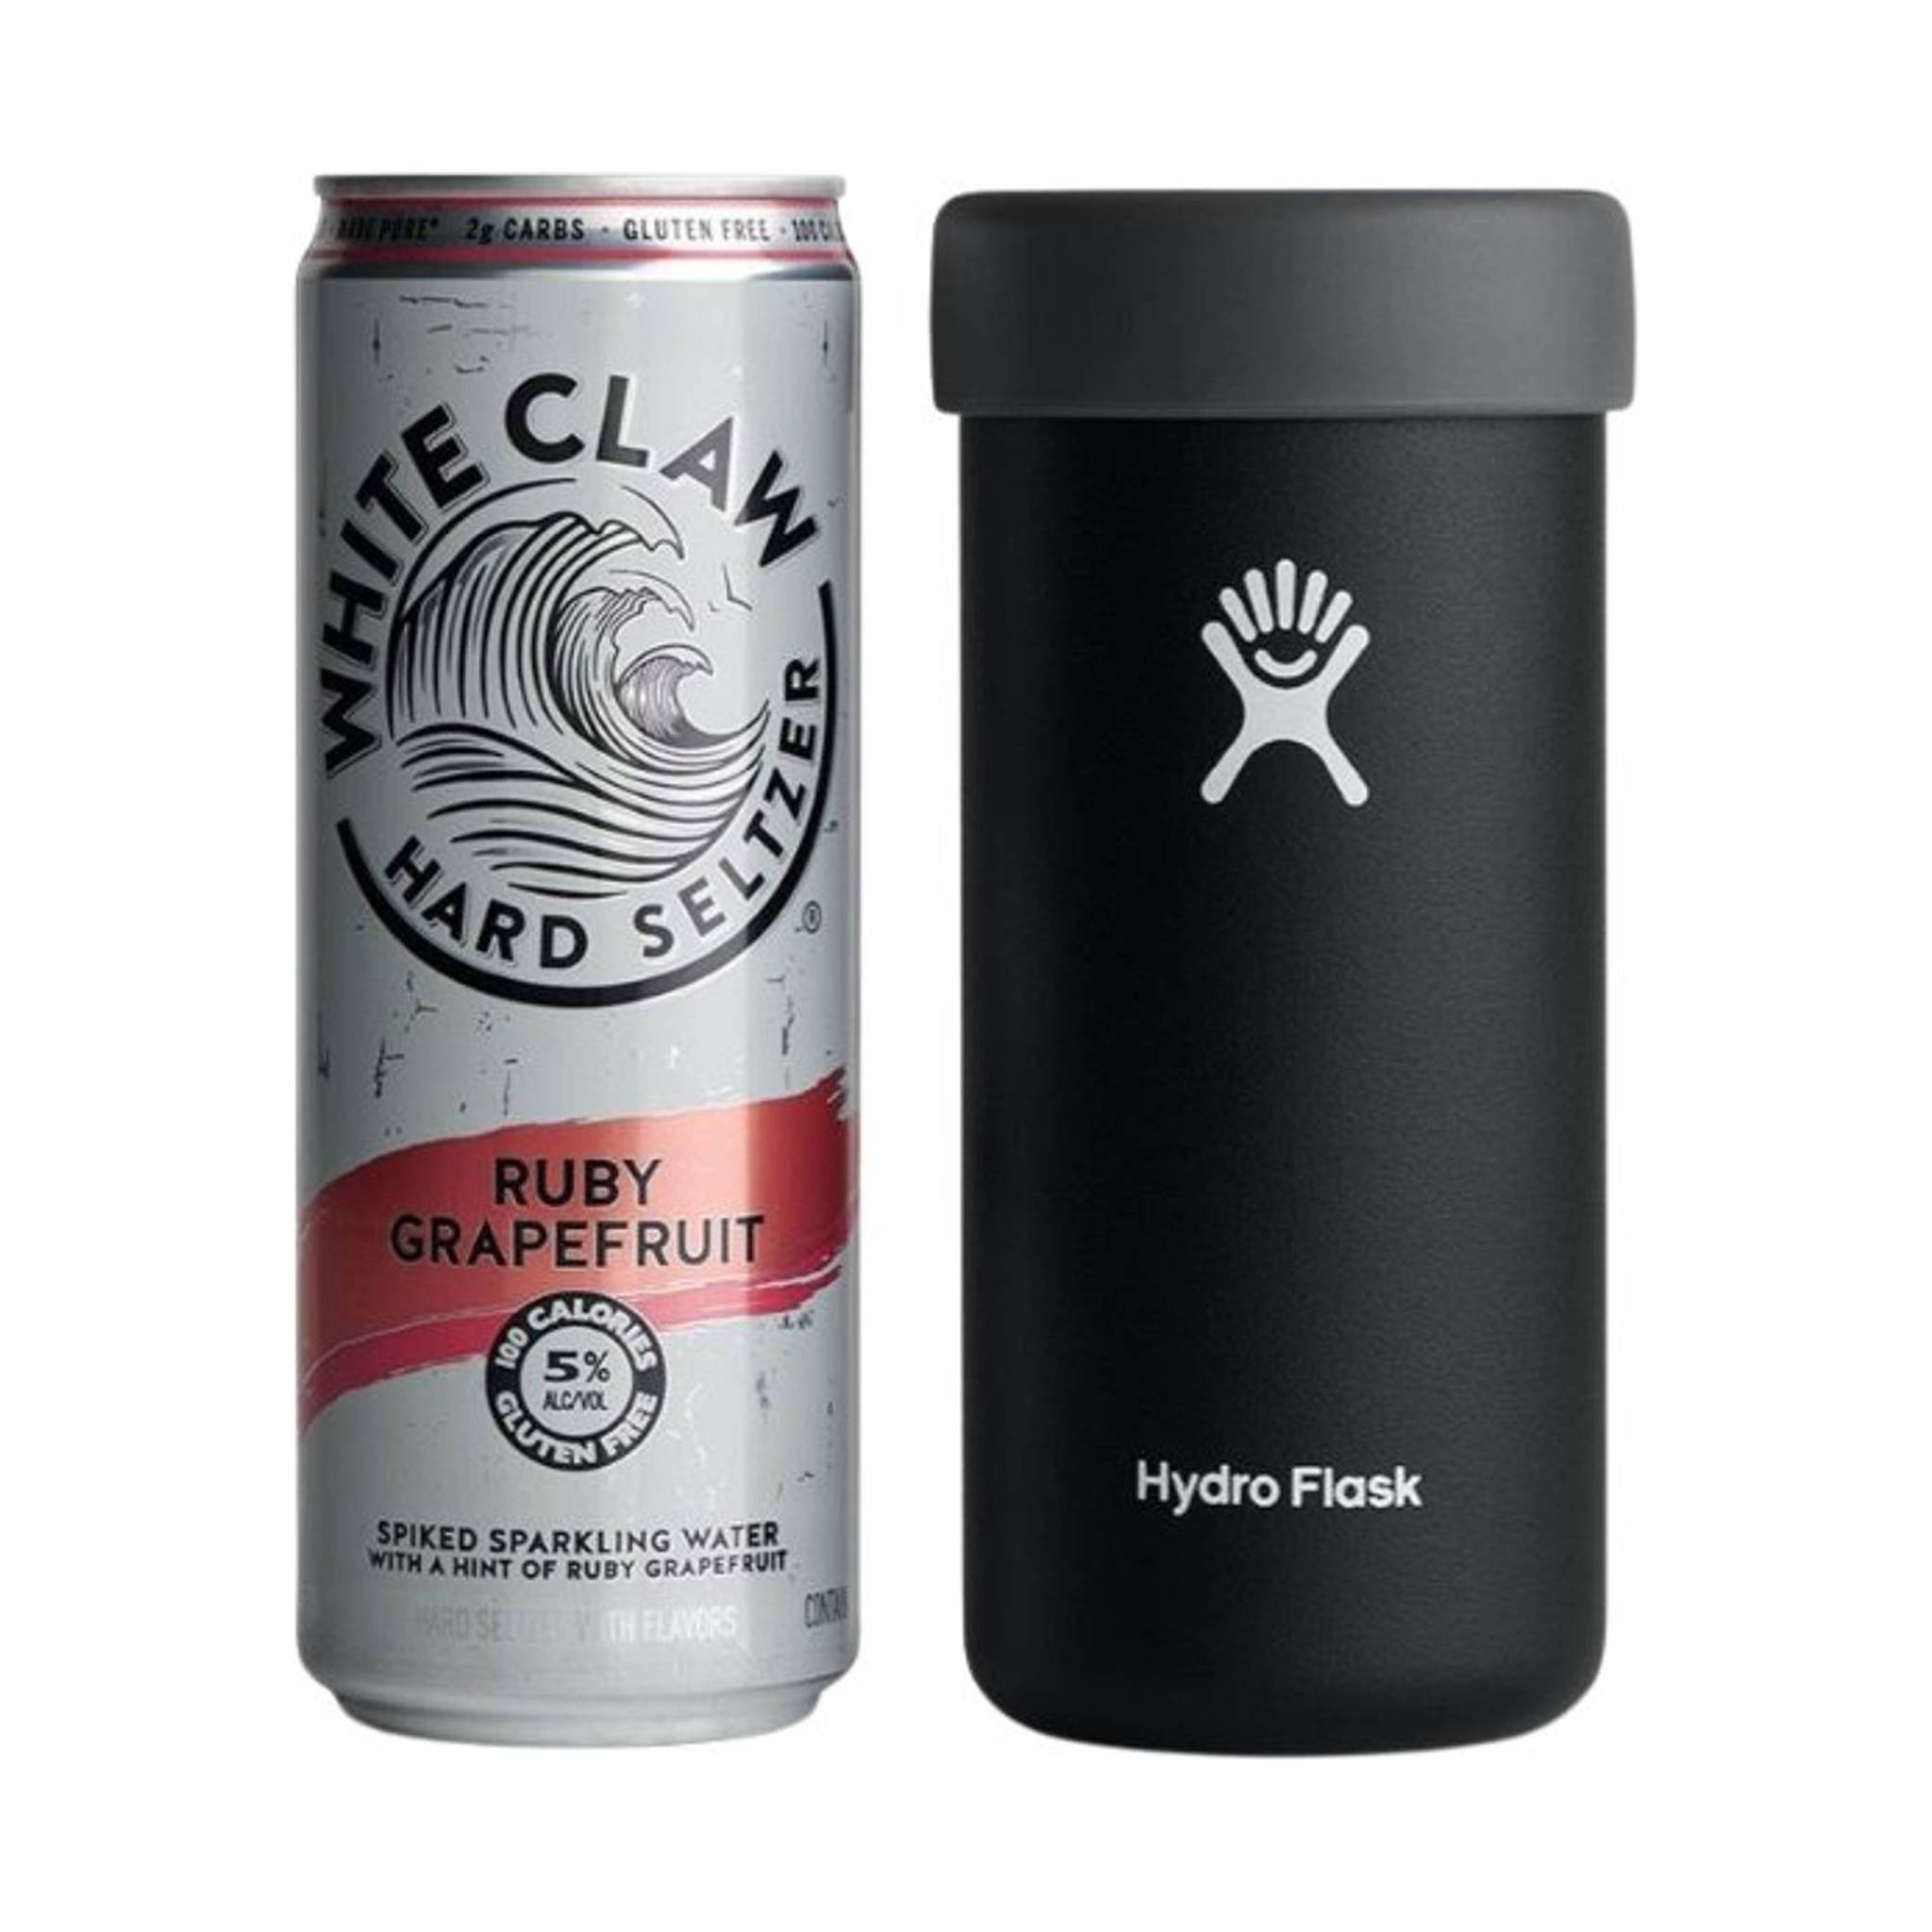 Hydro Flask 12 oz Slim Cooler Cup Black / 12 oz